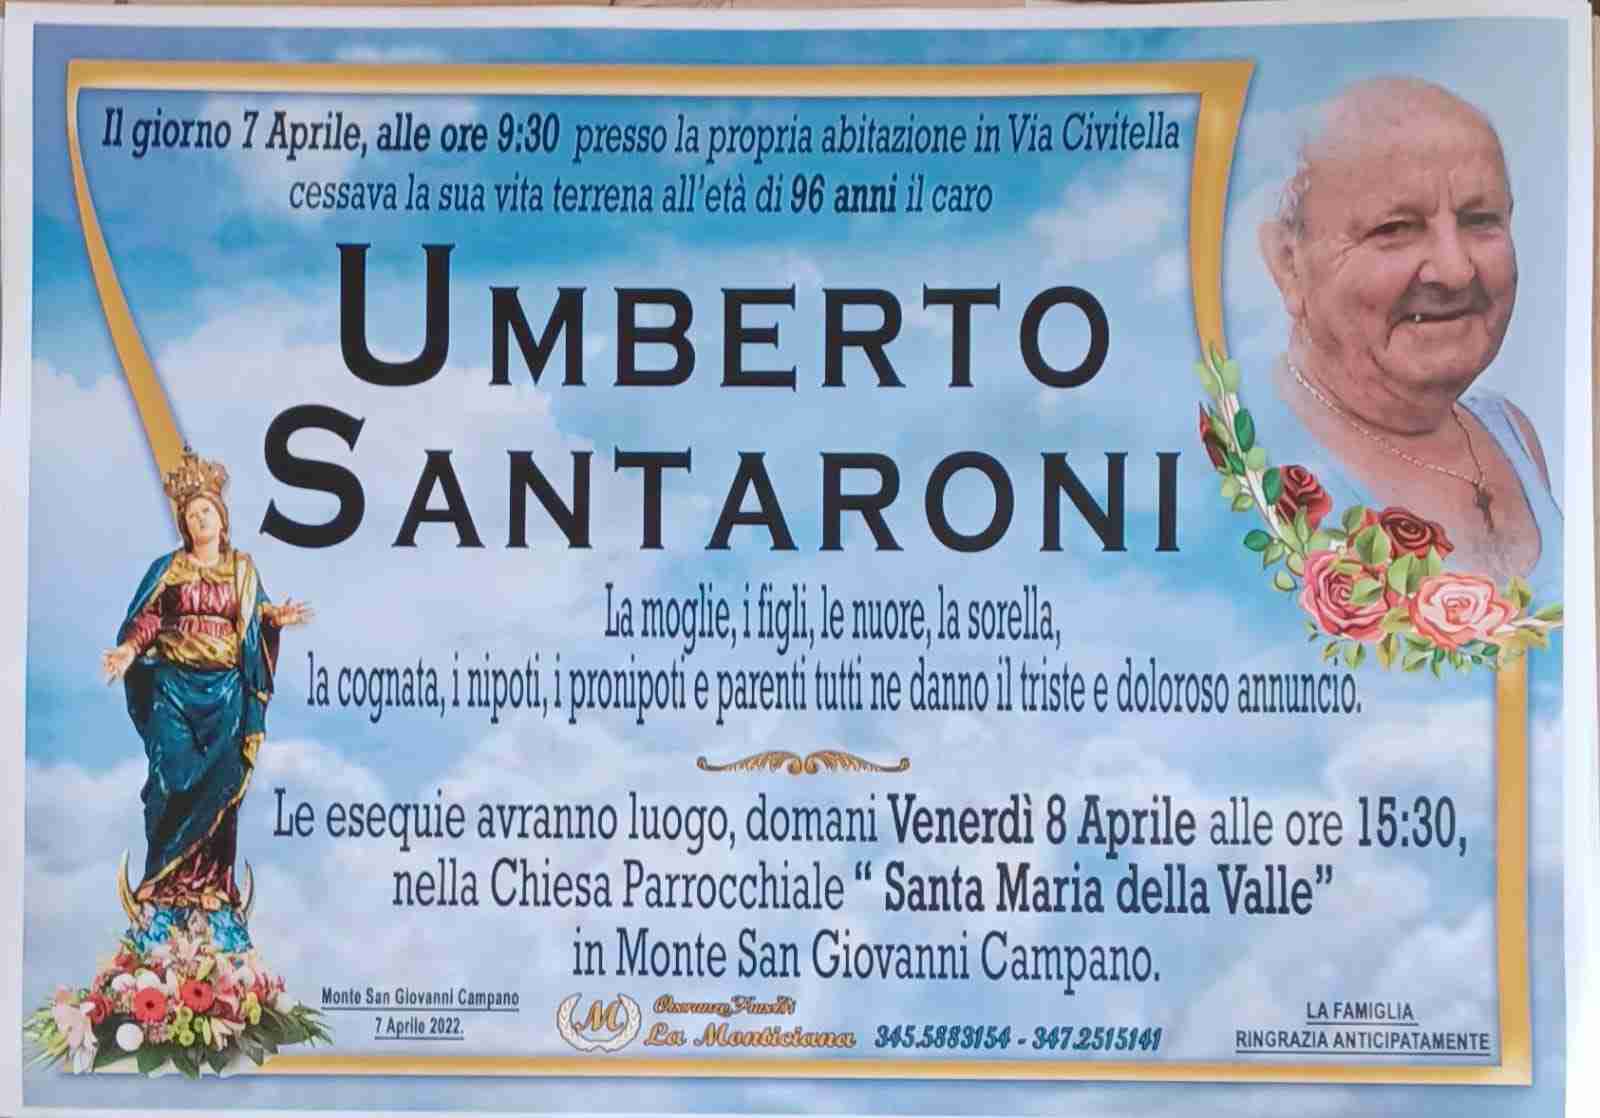 Umberto Santaroni